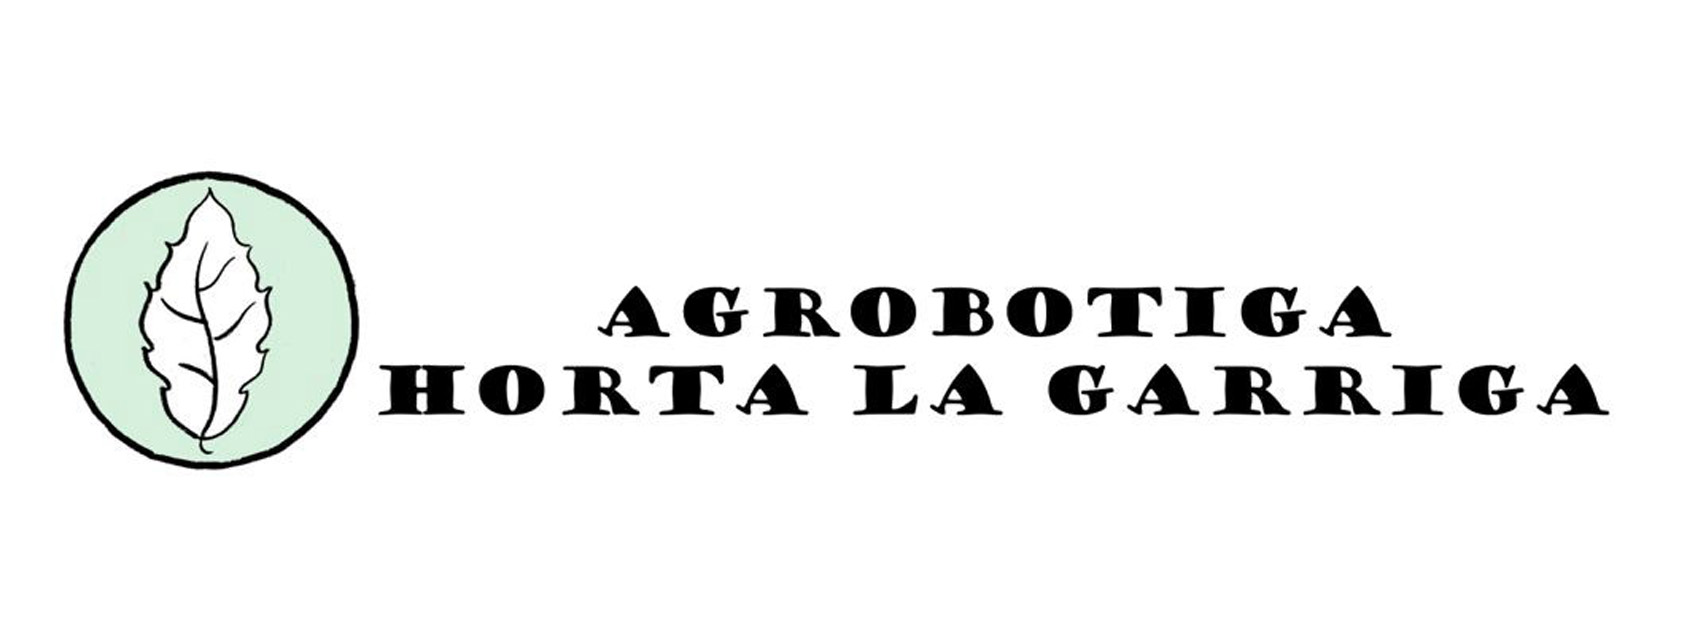 logo-hortalagarriga